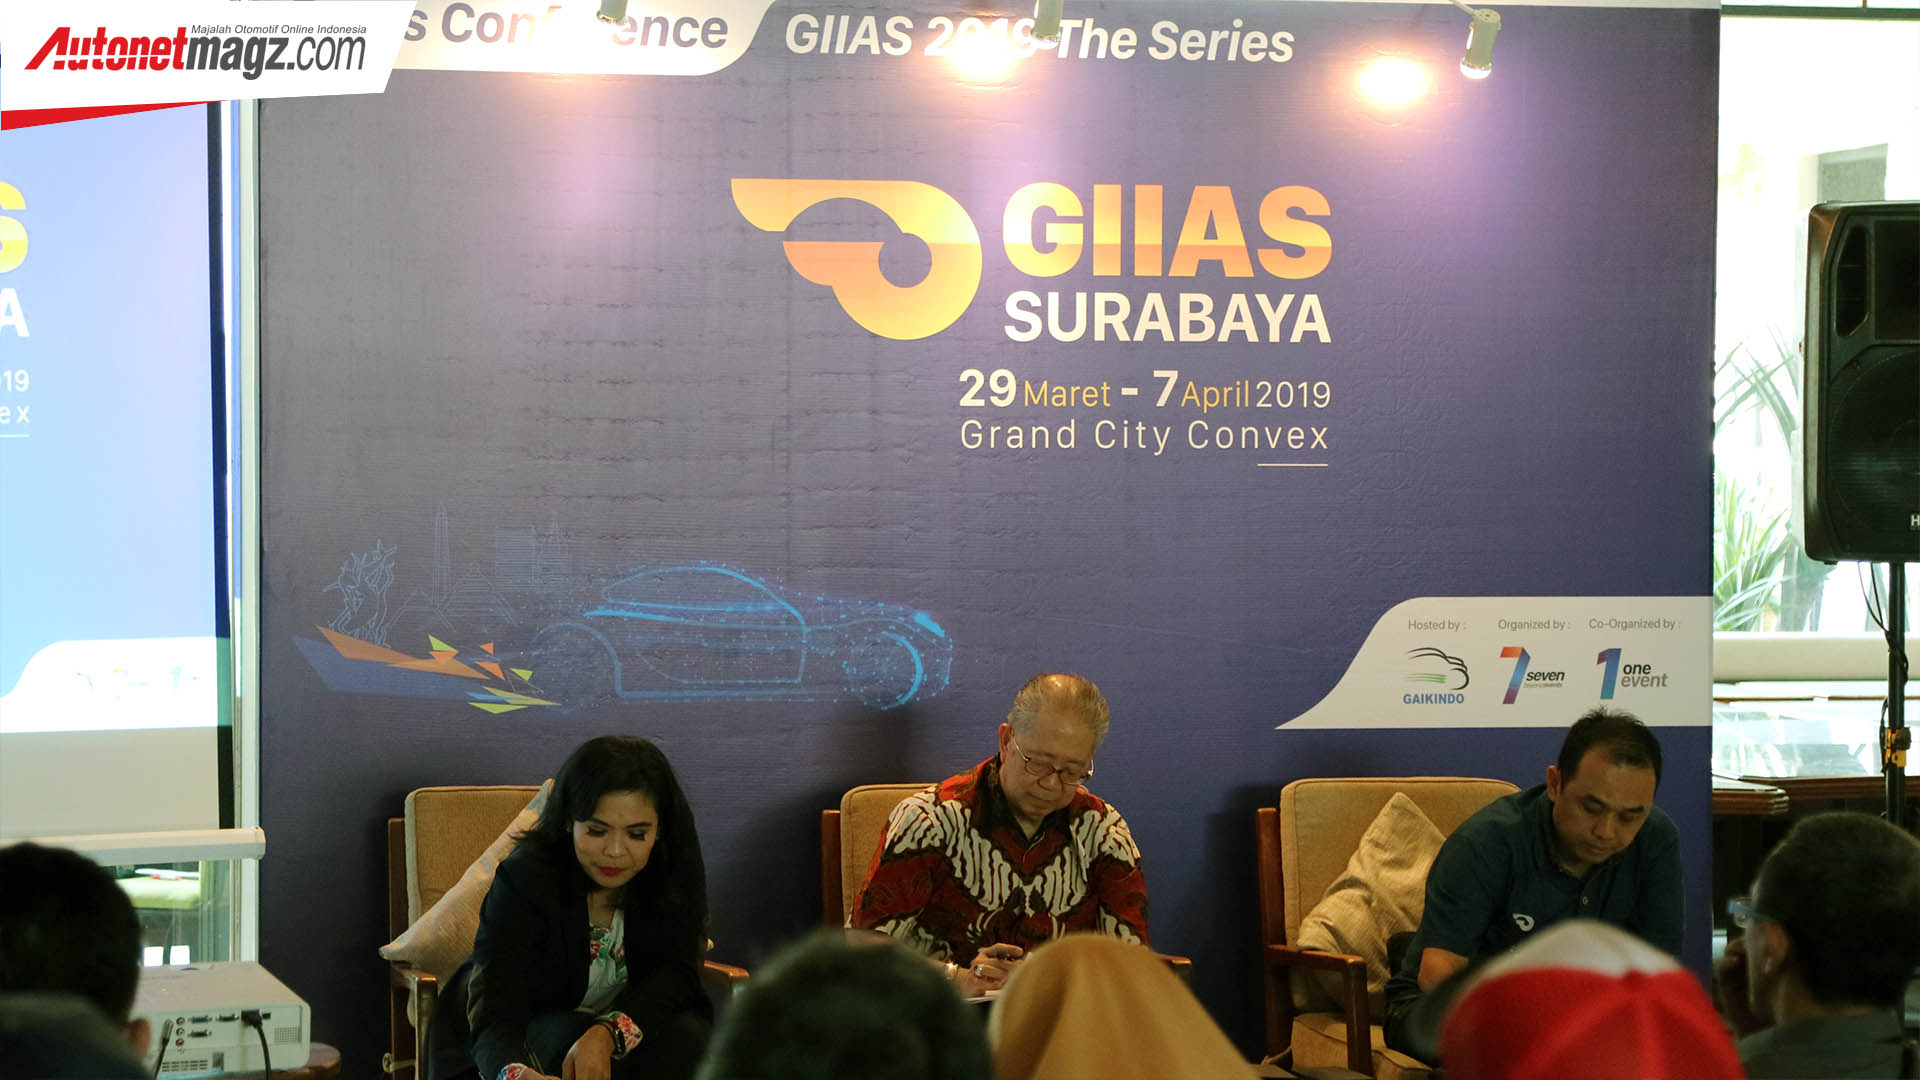 Berita, GIIAS The Series 2019 Surabaya: GIIAS Series 2019 Surabaya Siap Dimulai Besok!